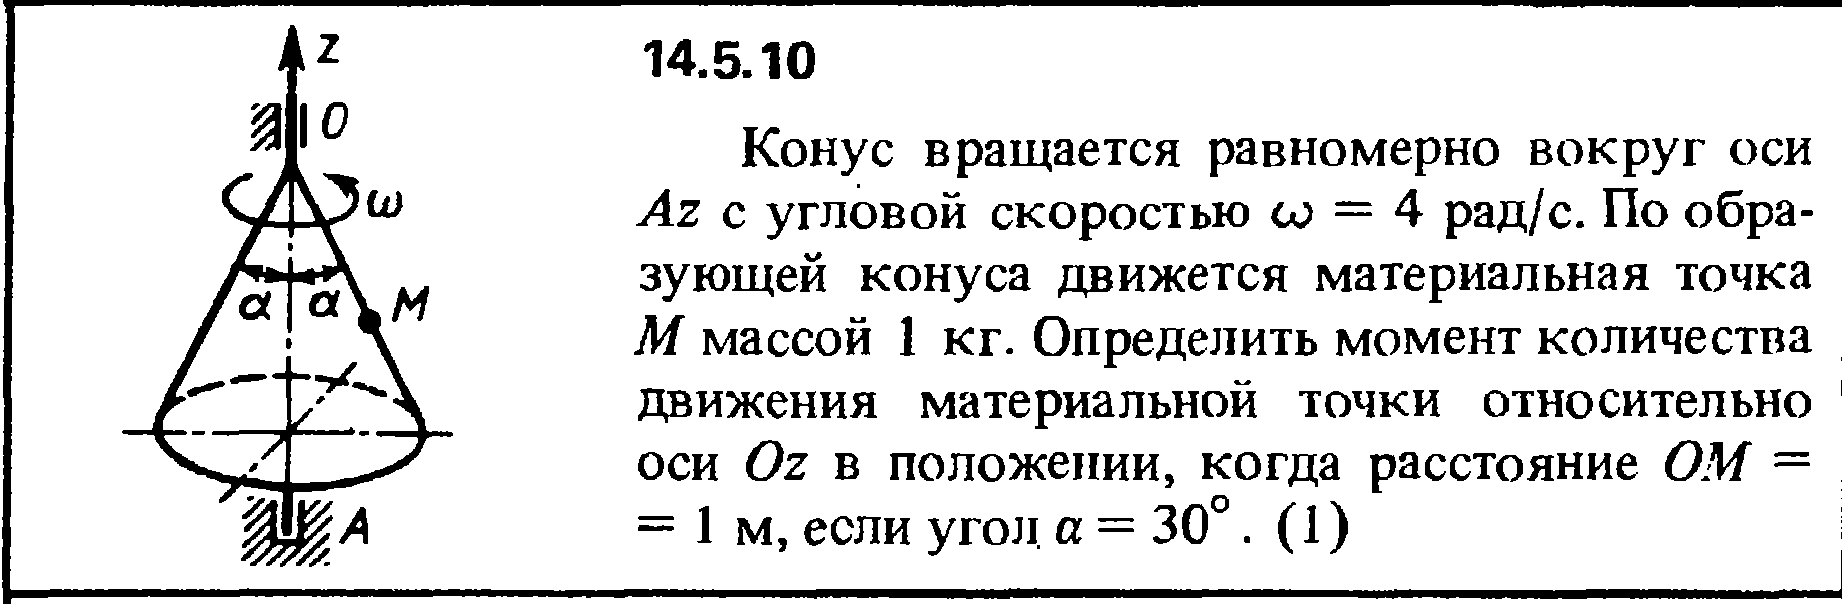 Решение задачи 14.5.10 из сборника Кепе О.Е. 1989 года